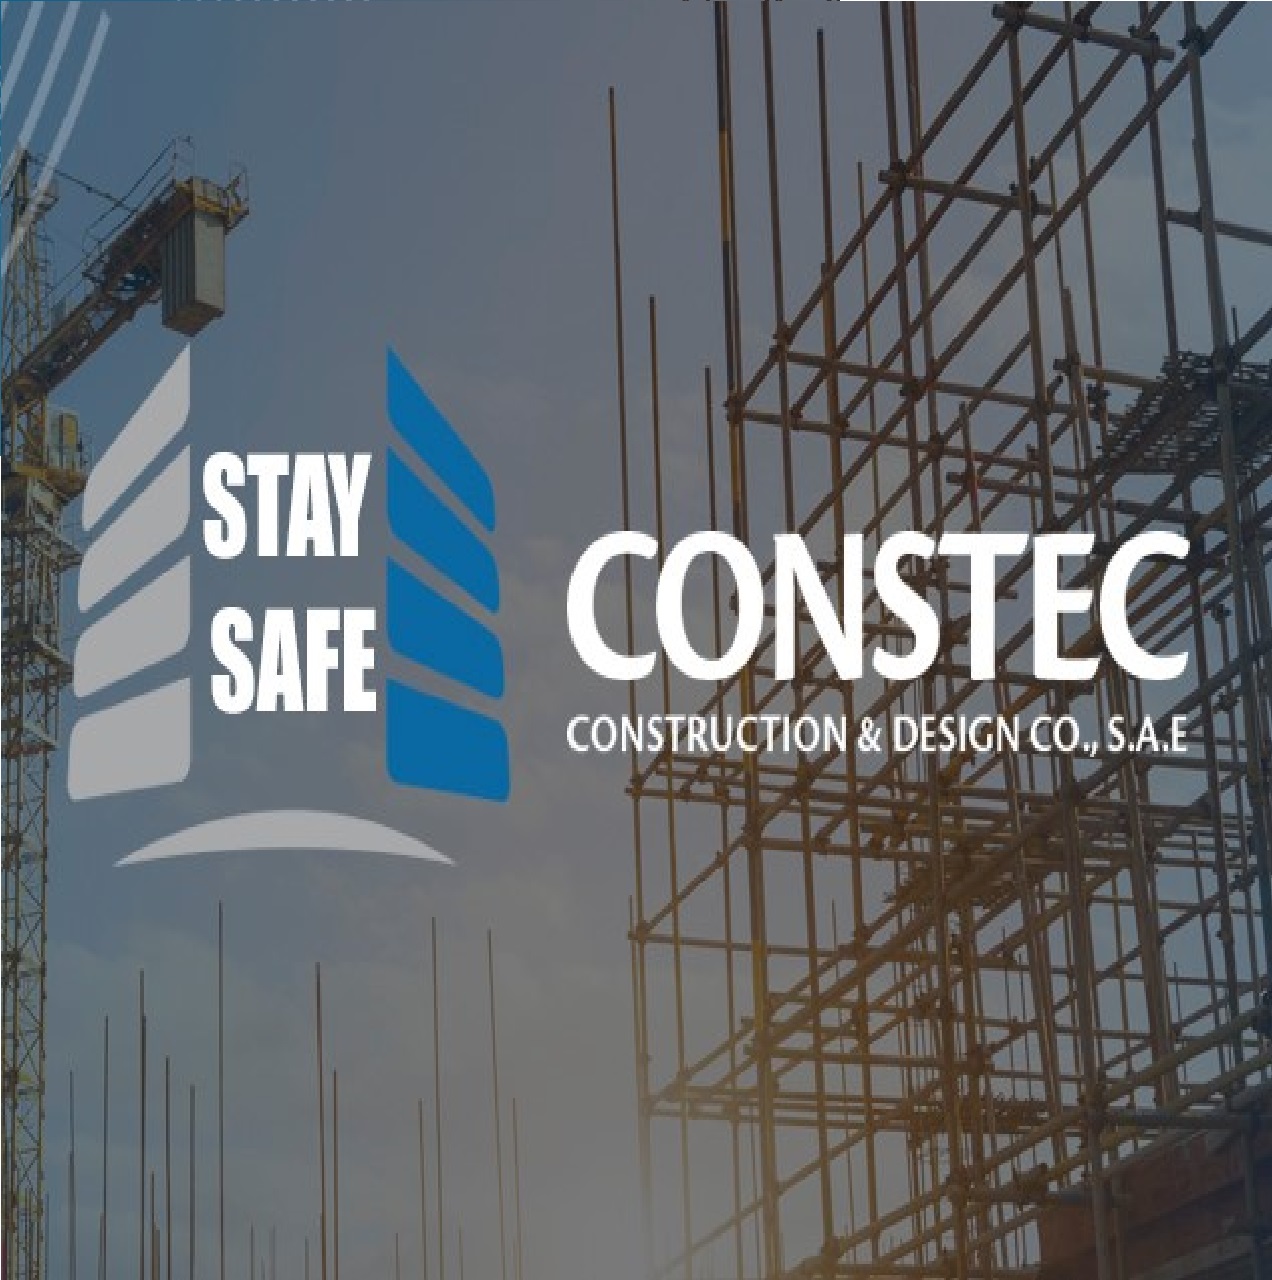 (Constec) Construction & Design Company